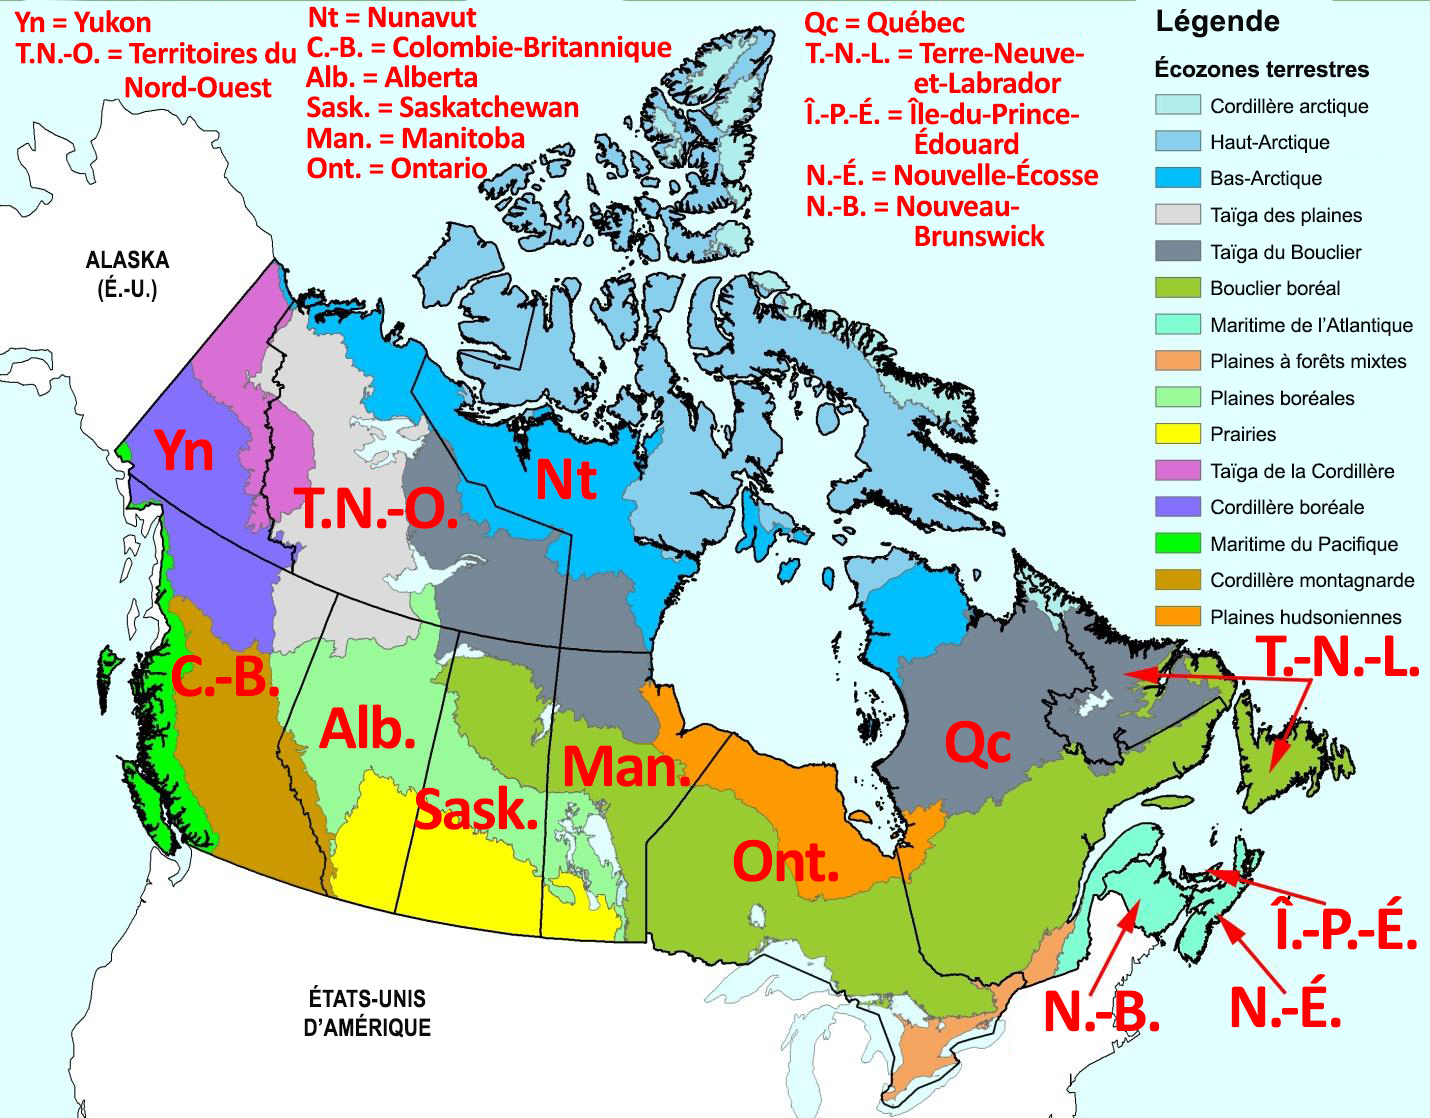 Carte du Canada montrant les écozones terrestres